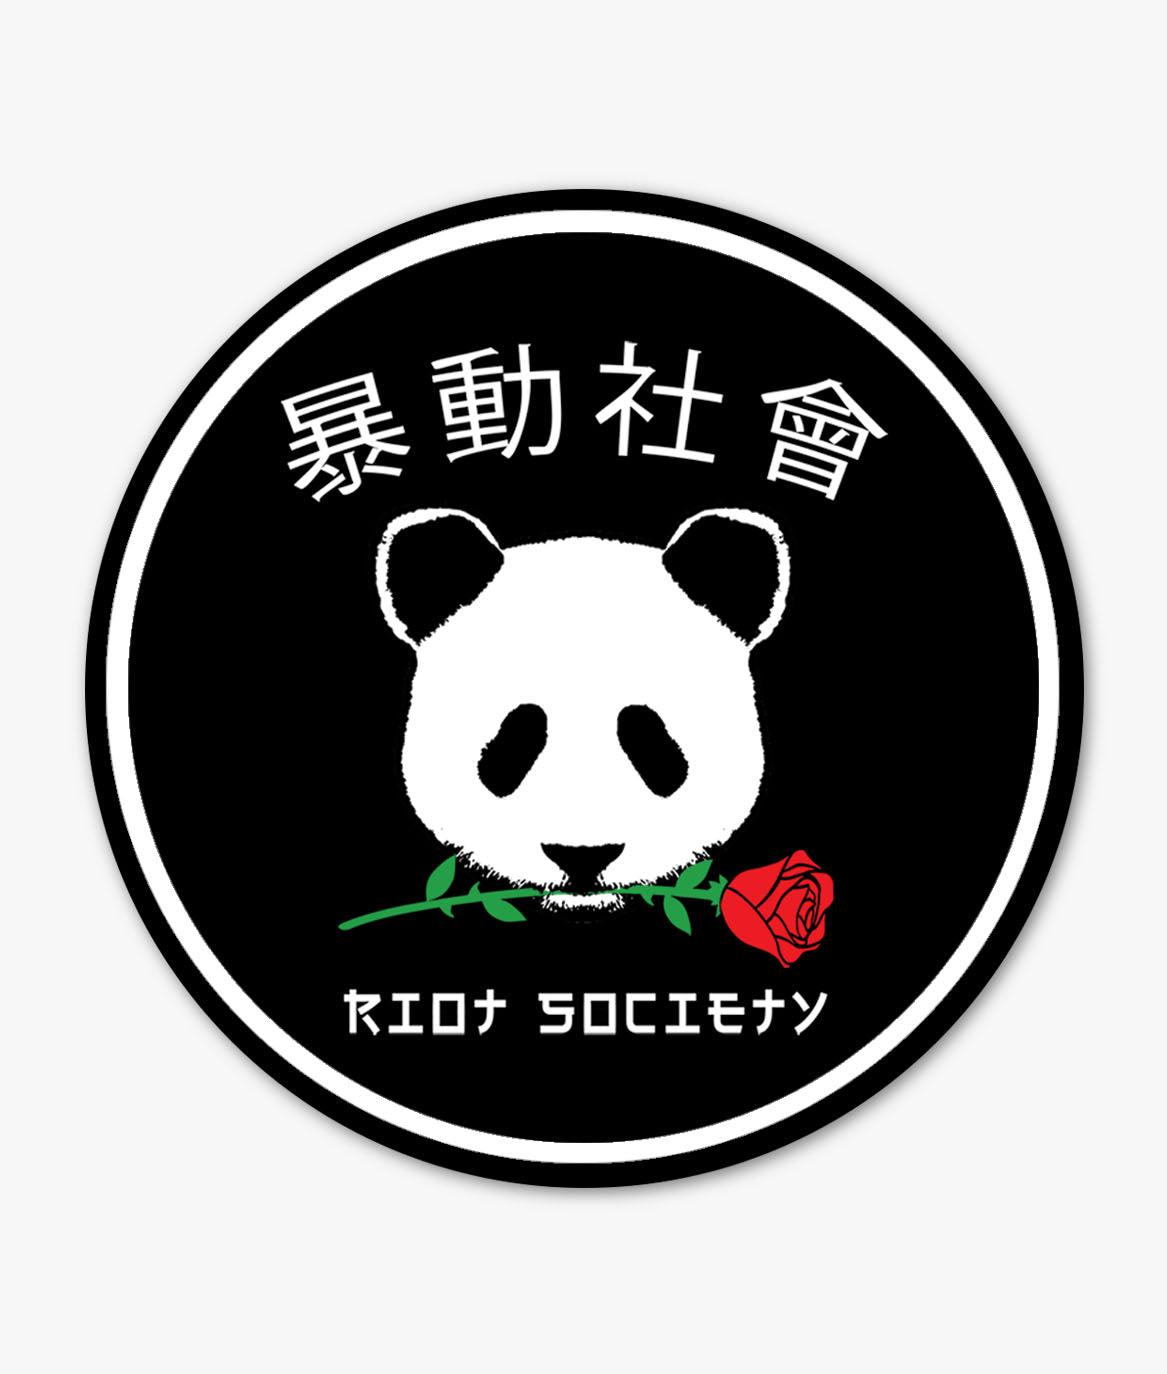 Panda Rose Sticker - OS - Riot Society